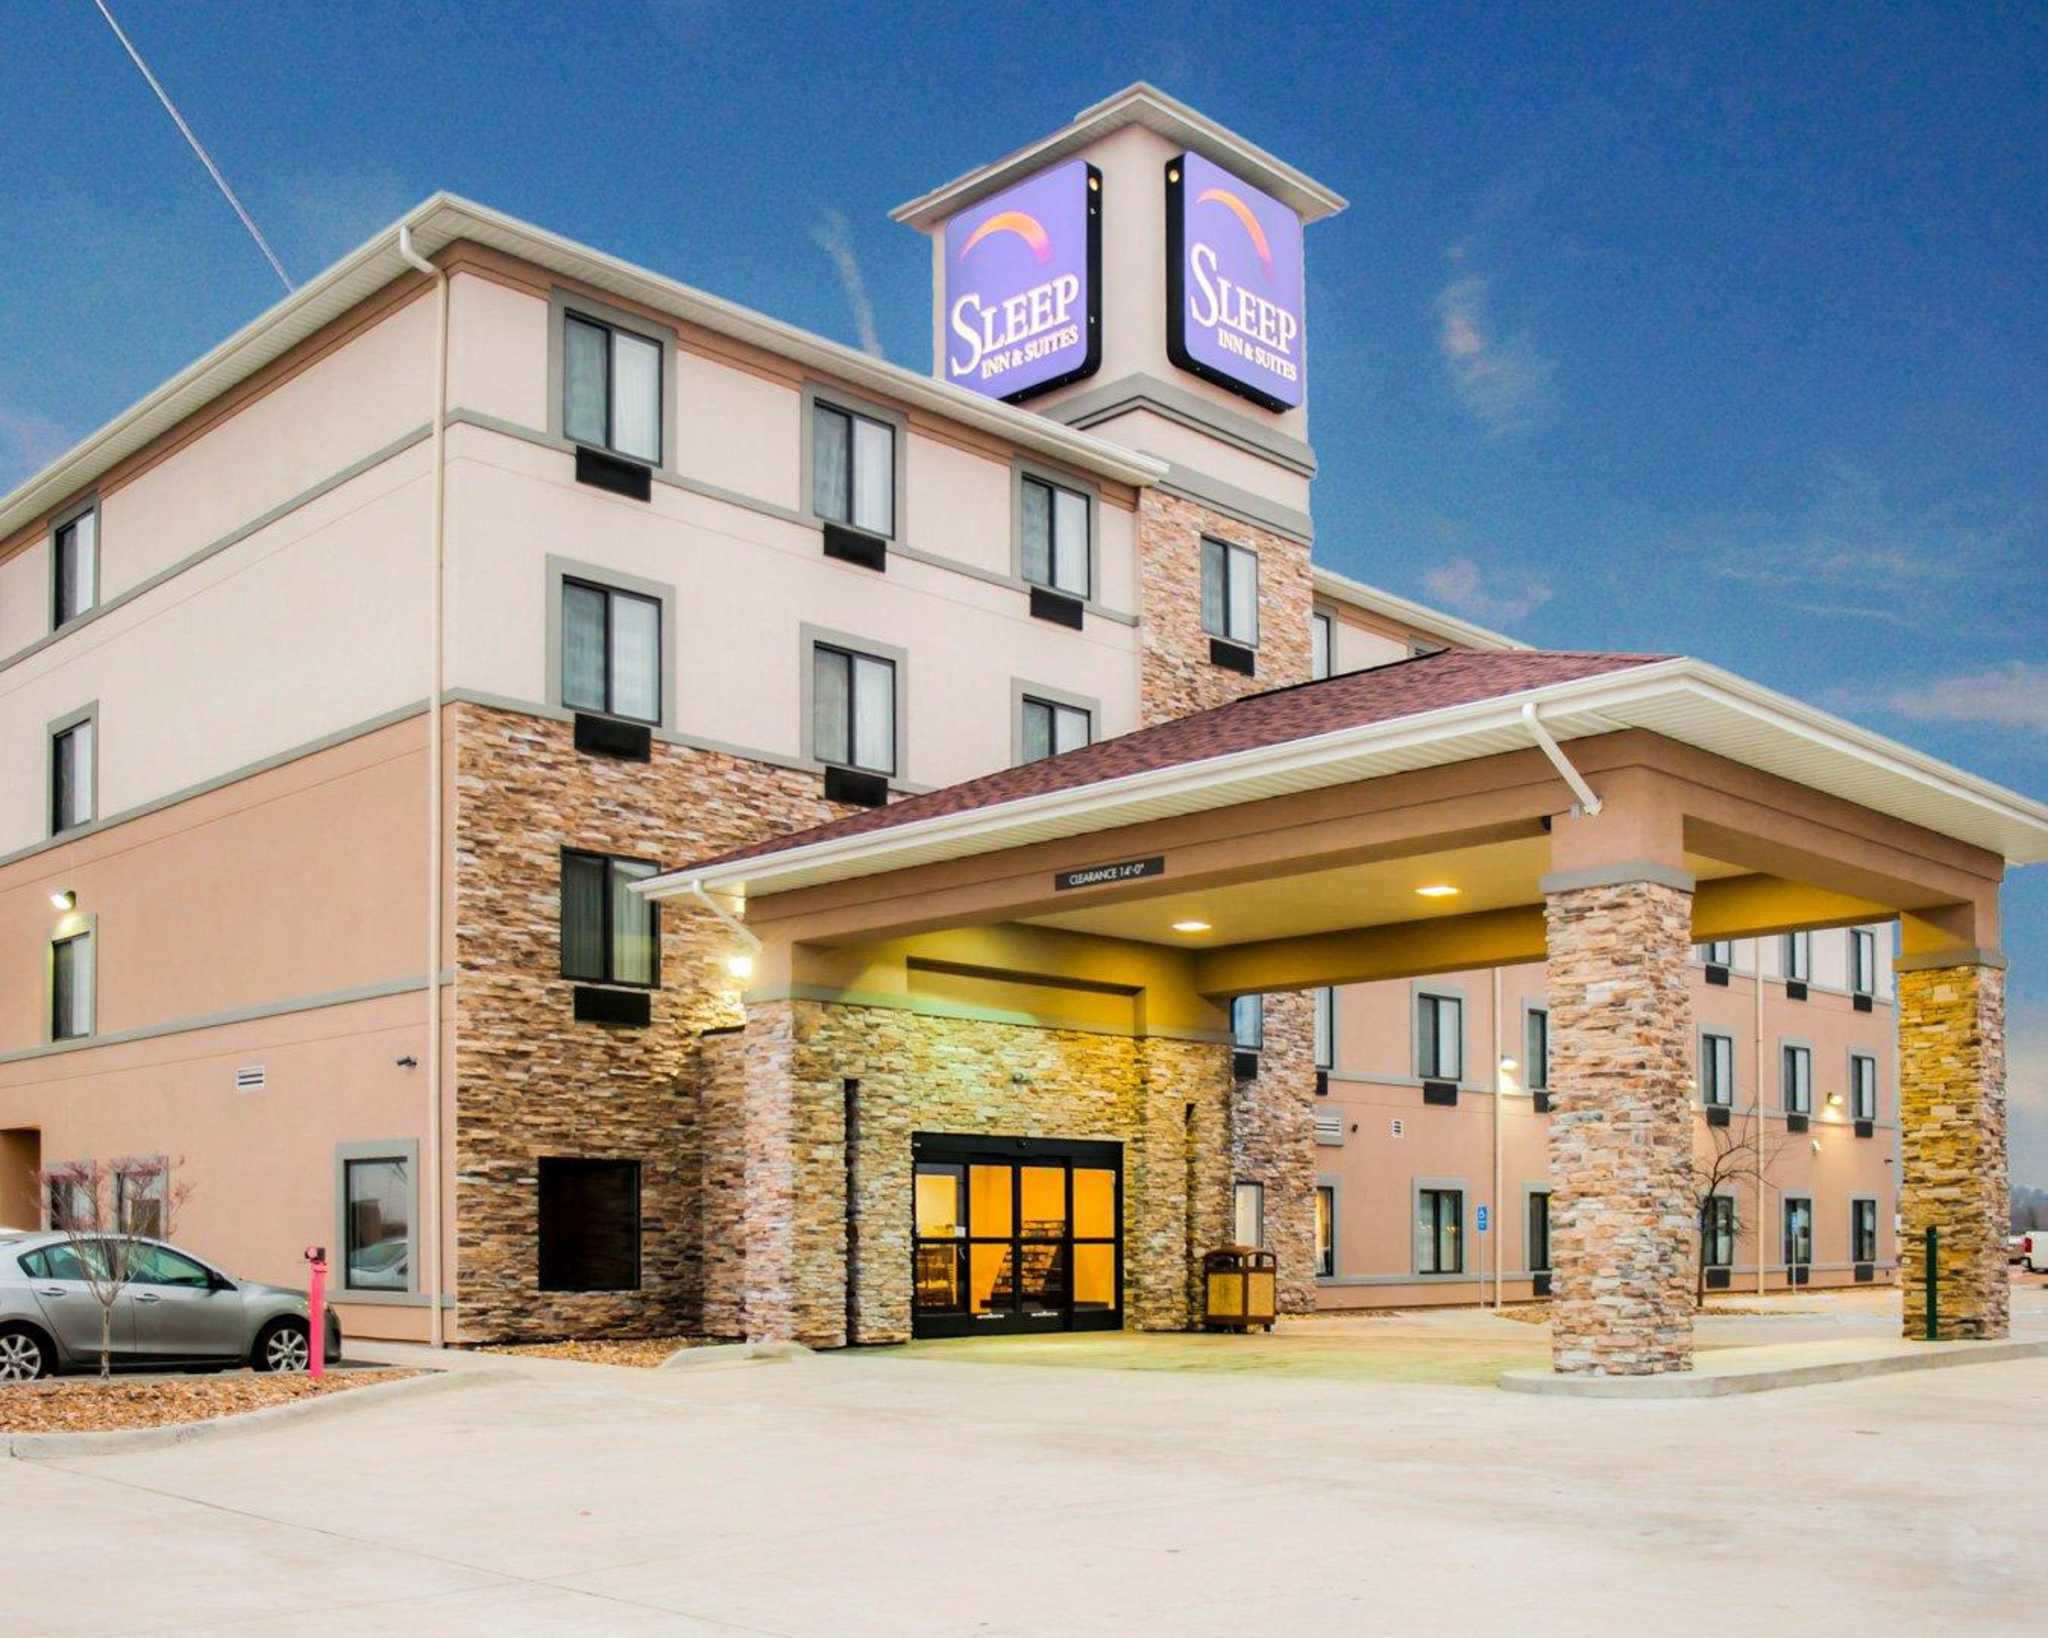 Sleep Inn & Suites Fort Campbell in Oak Grove, KY (270) 6407...